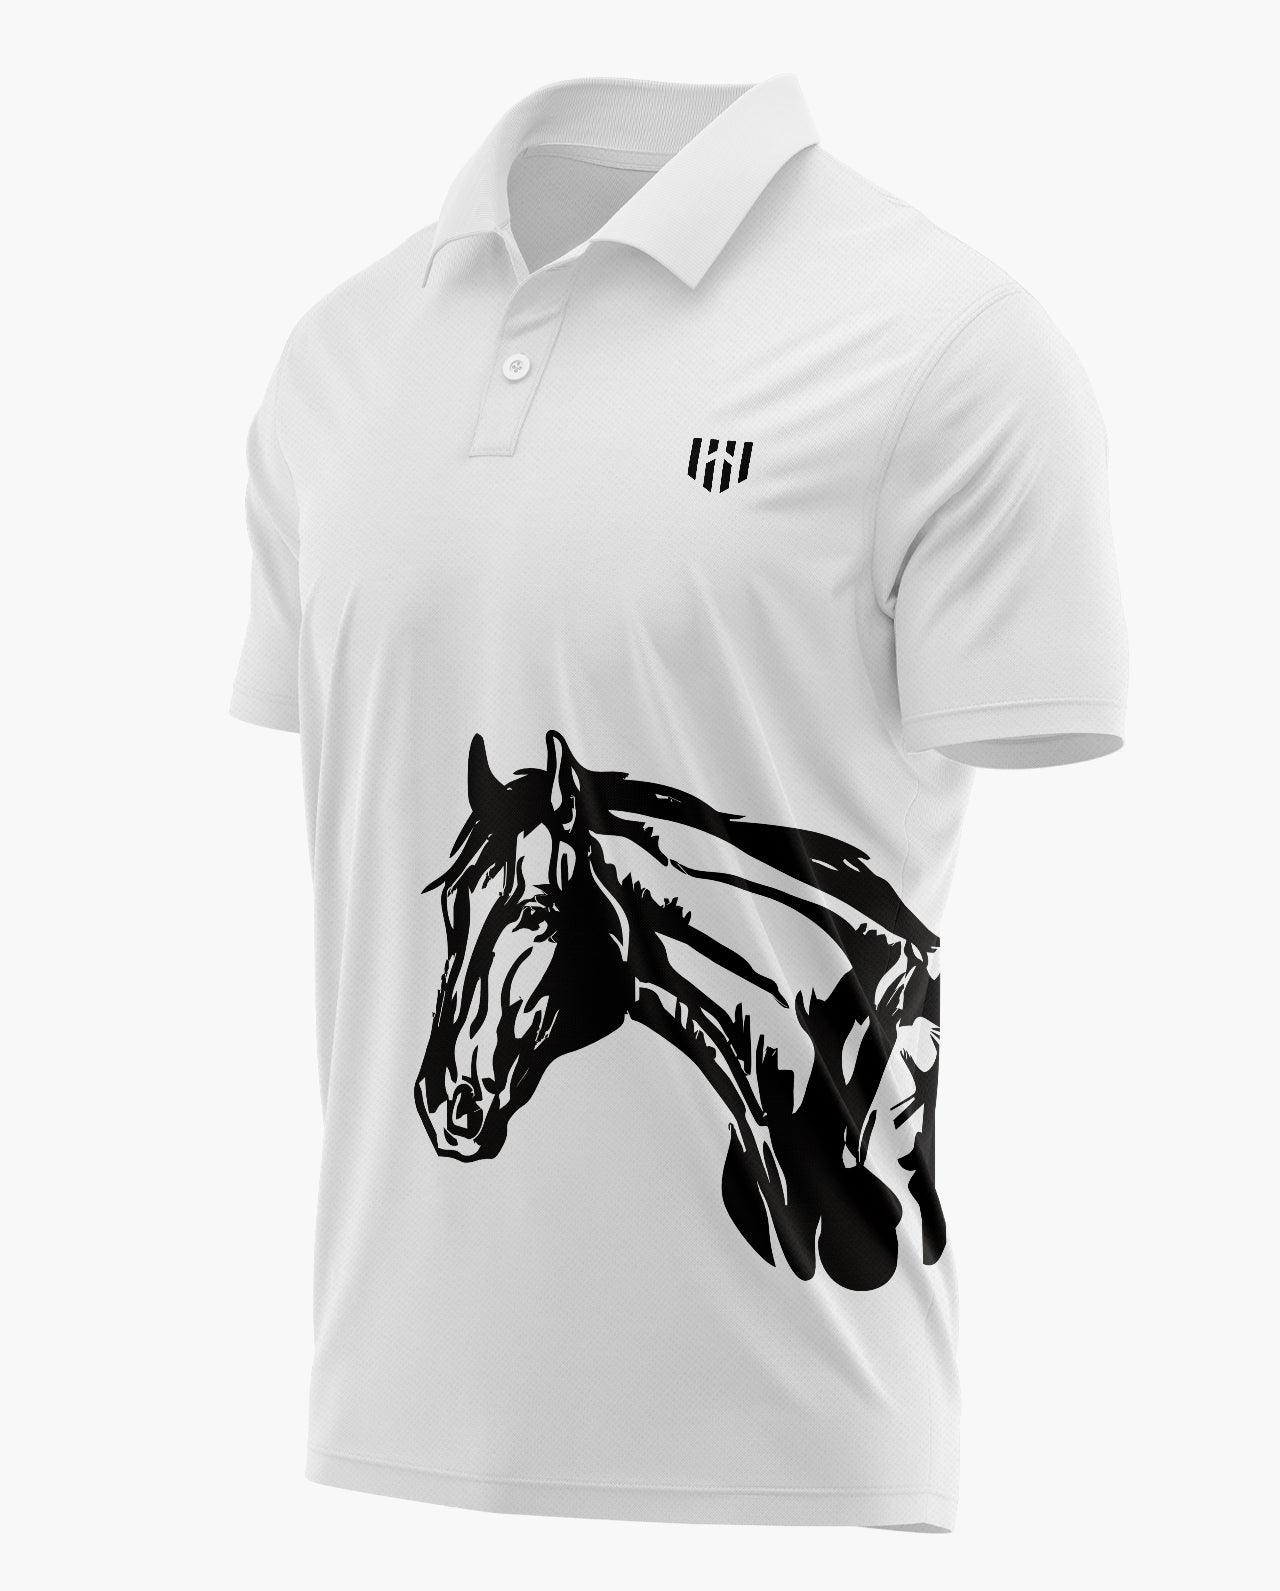 VIRAT The Dark Horse Polo T-Shirt - Aero Armour